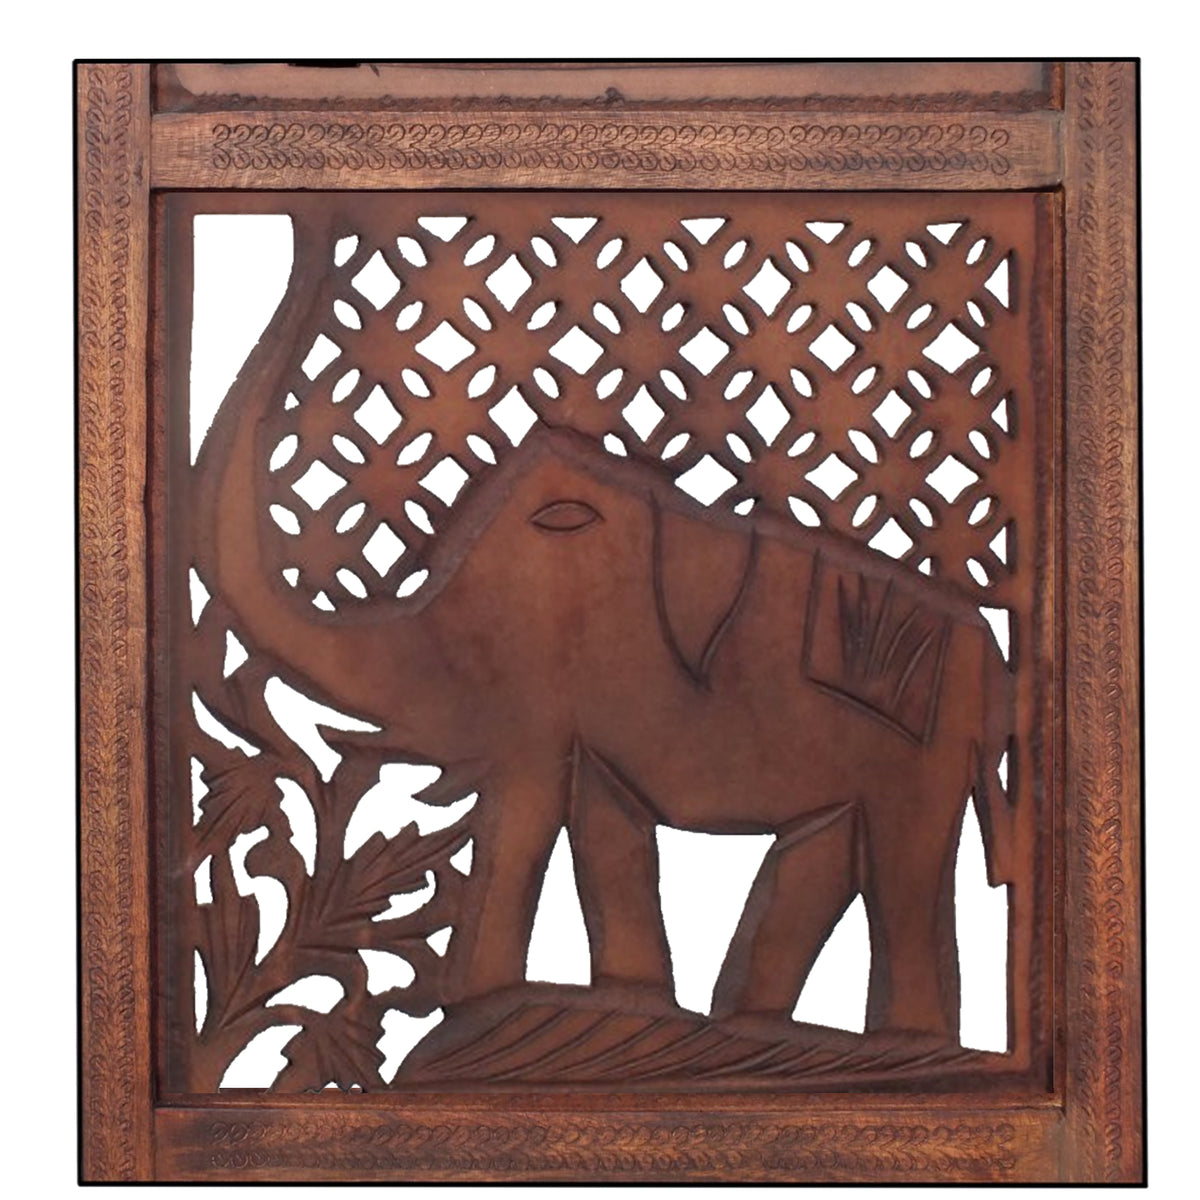 Zofi Hand Carved Elephant Design Foldable 4 Panel Wooden Room Divider, Brown - BM34823